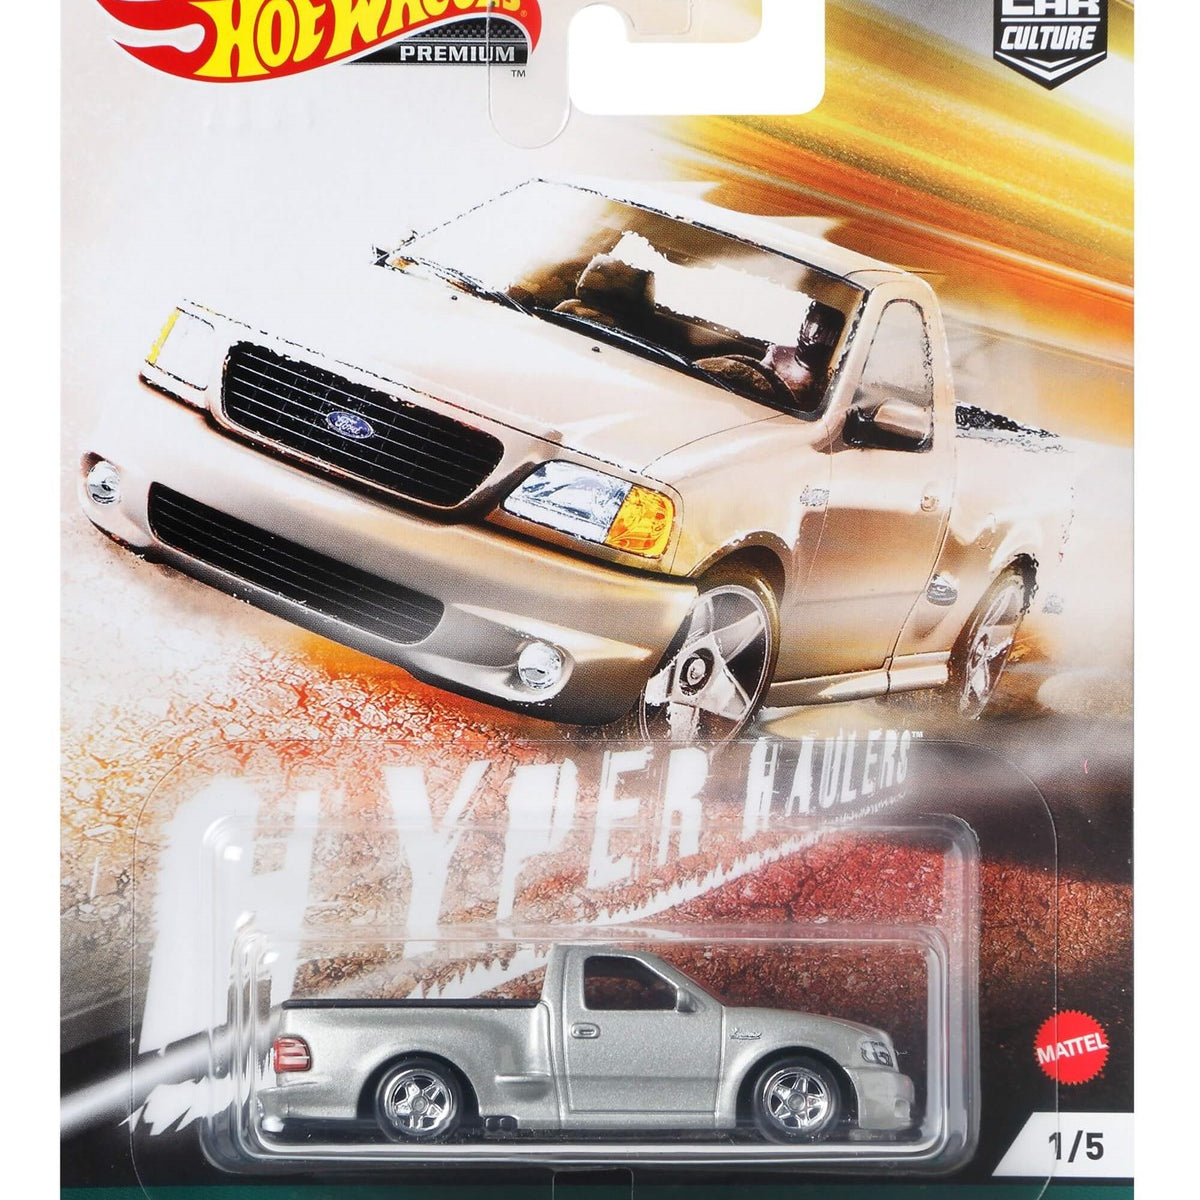 Hot Wheels Car Culture Premium Arabalar FPY86-GRJ88 | Toysall